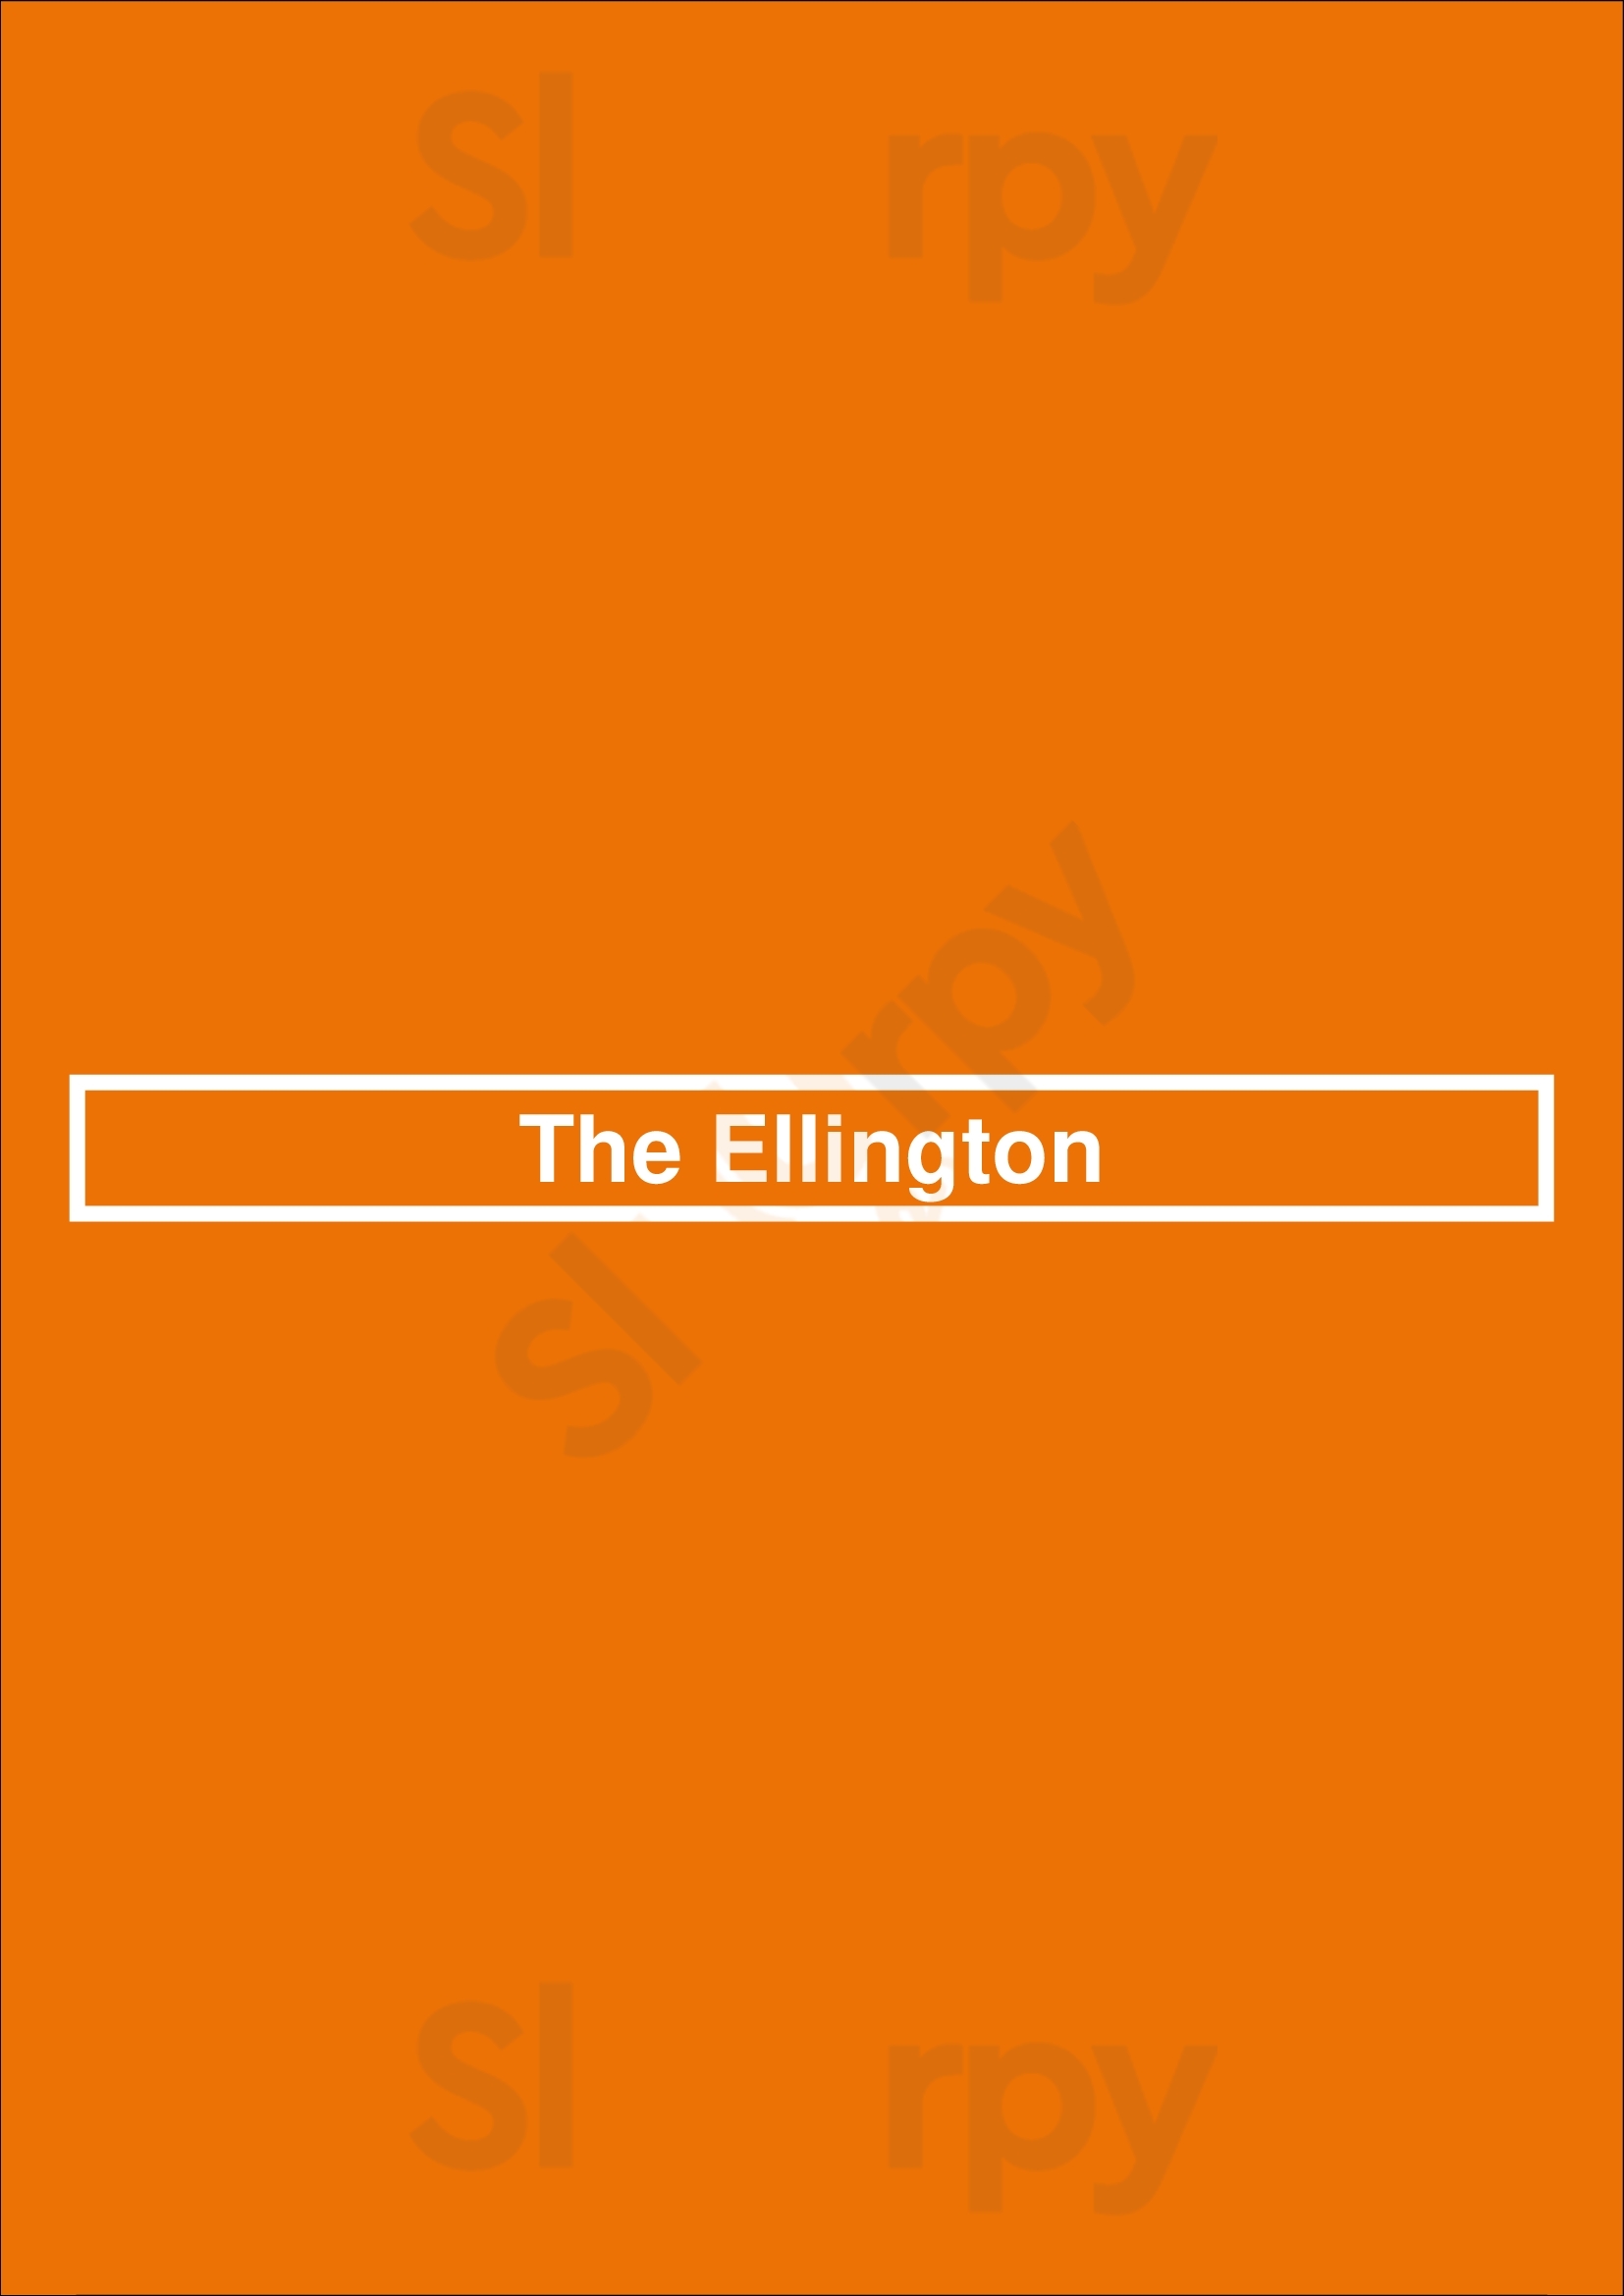 The Ellington New York City Menu - 1